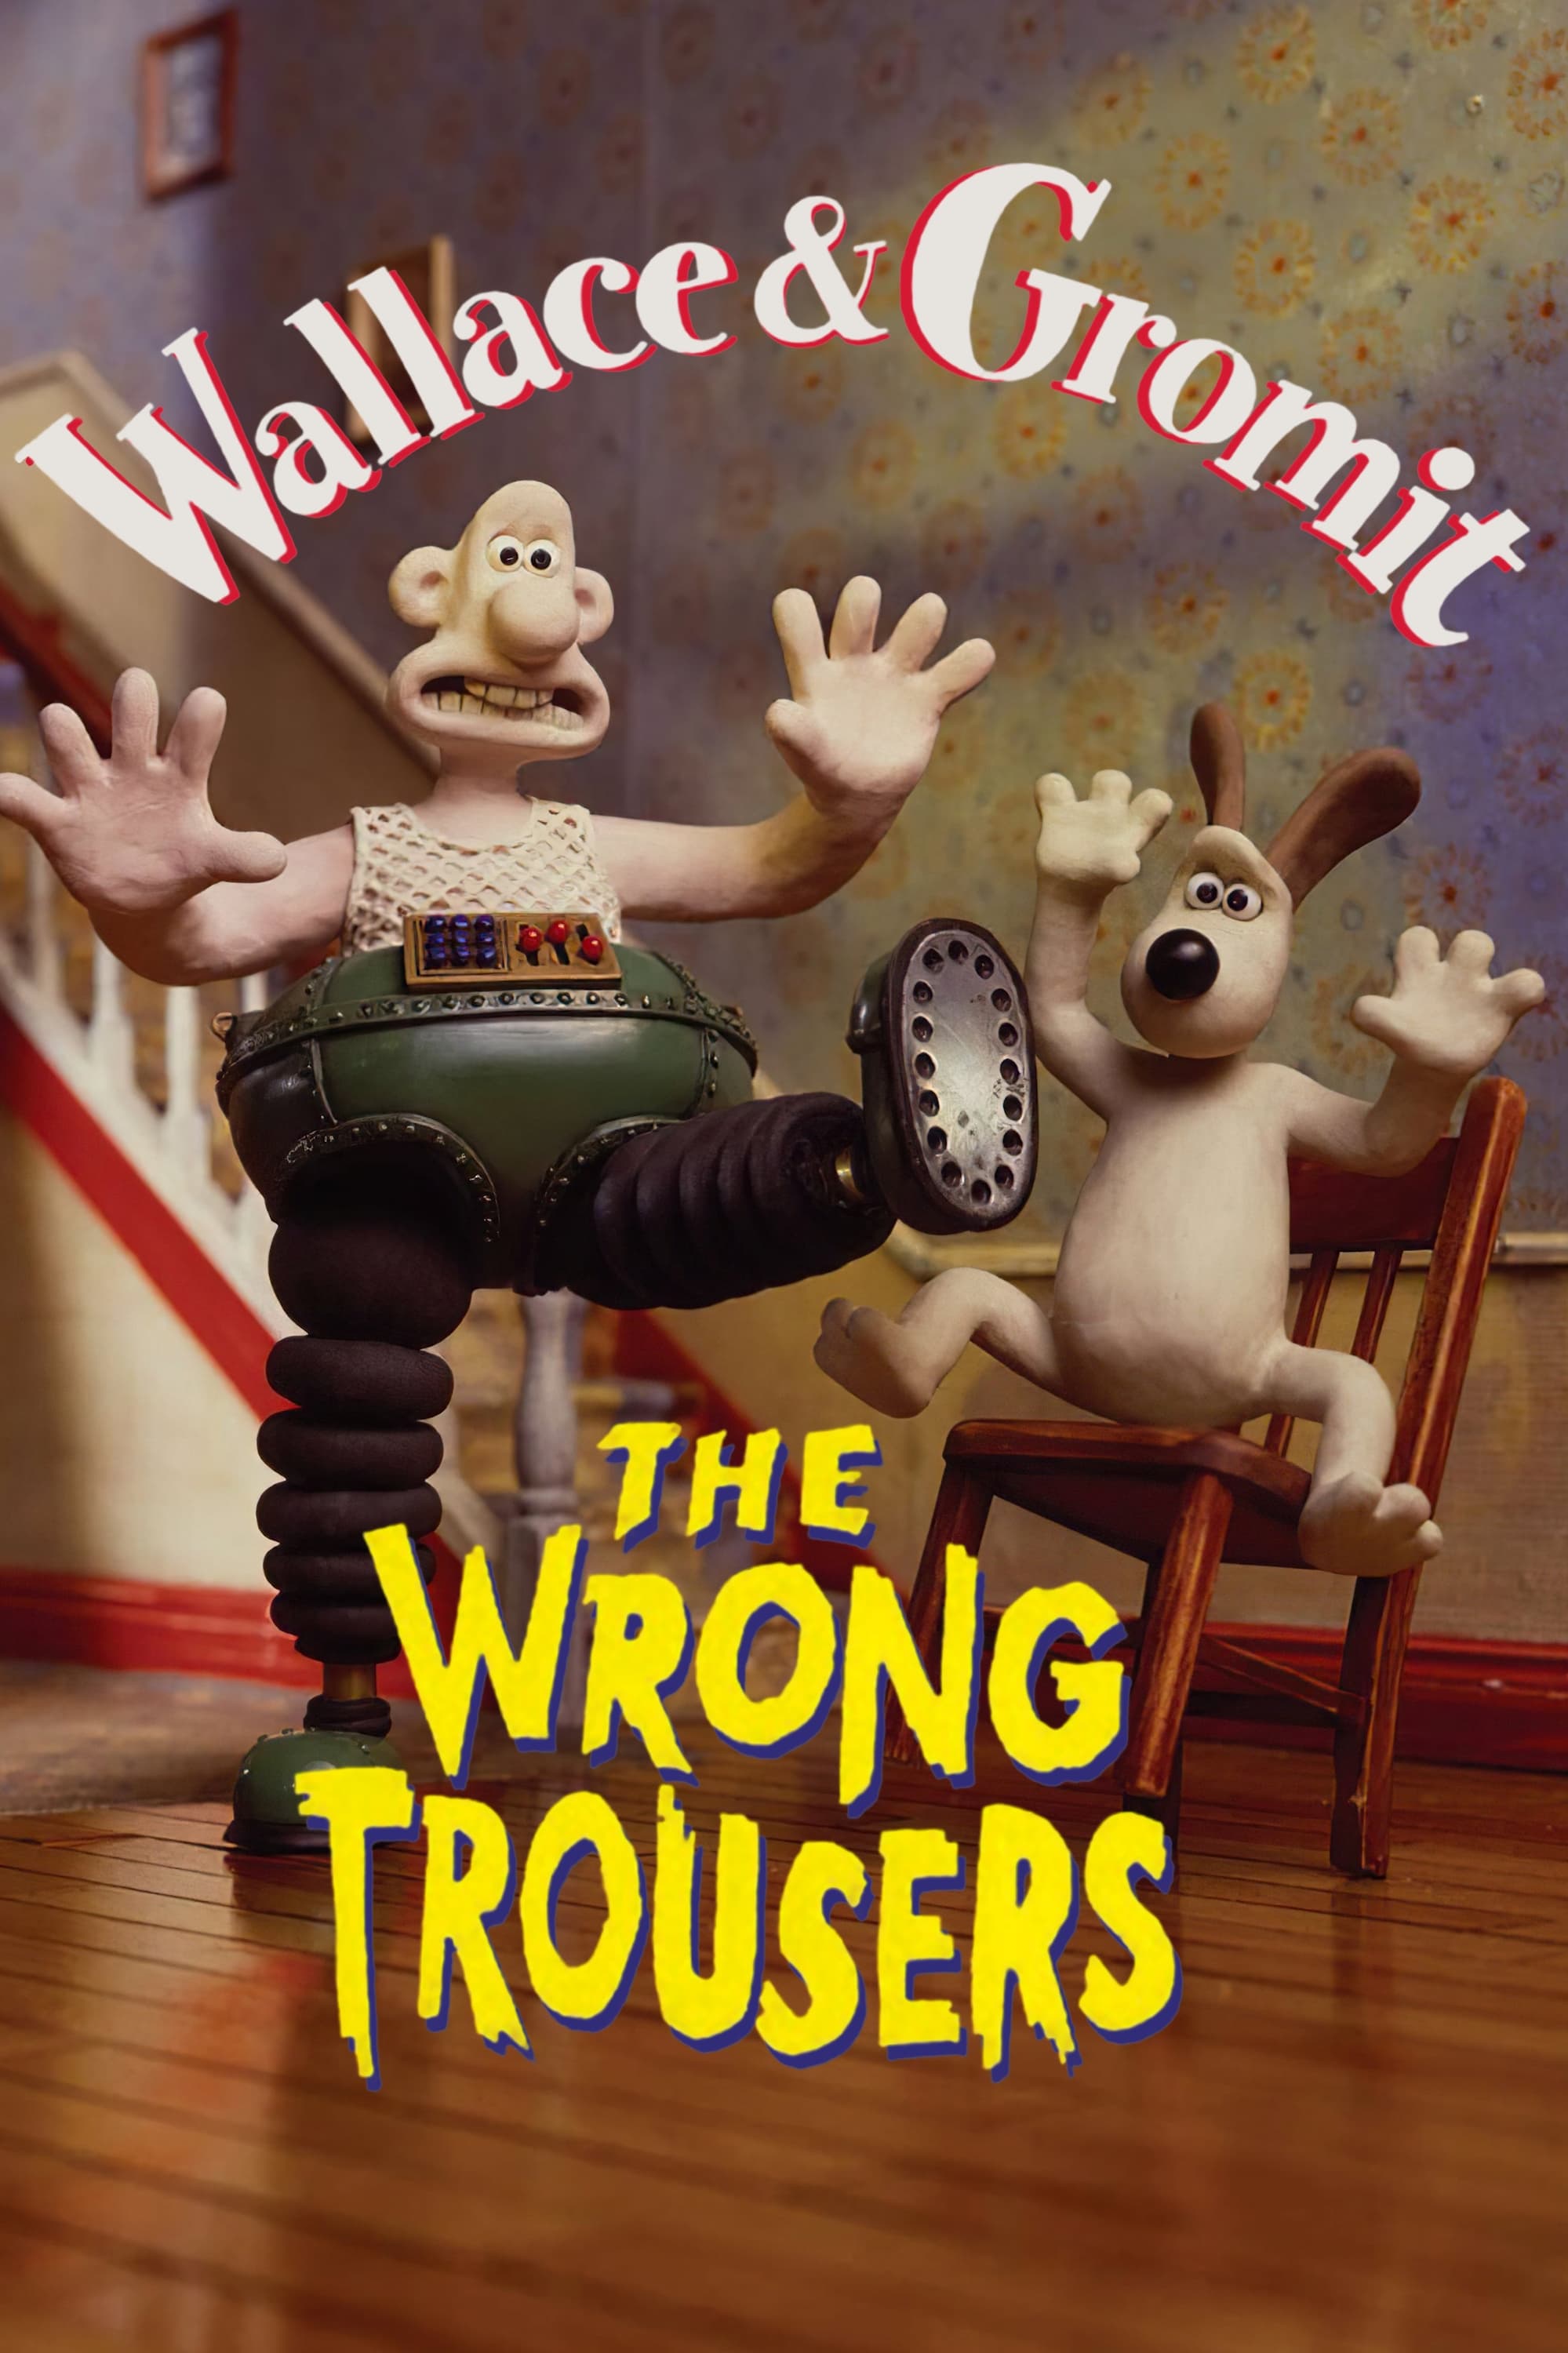 Wallace và Gromit - Chiếc Quần Rắc Rối (The Wrong Trousers) [1993]